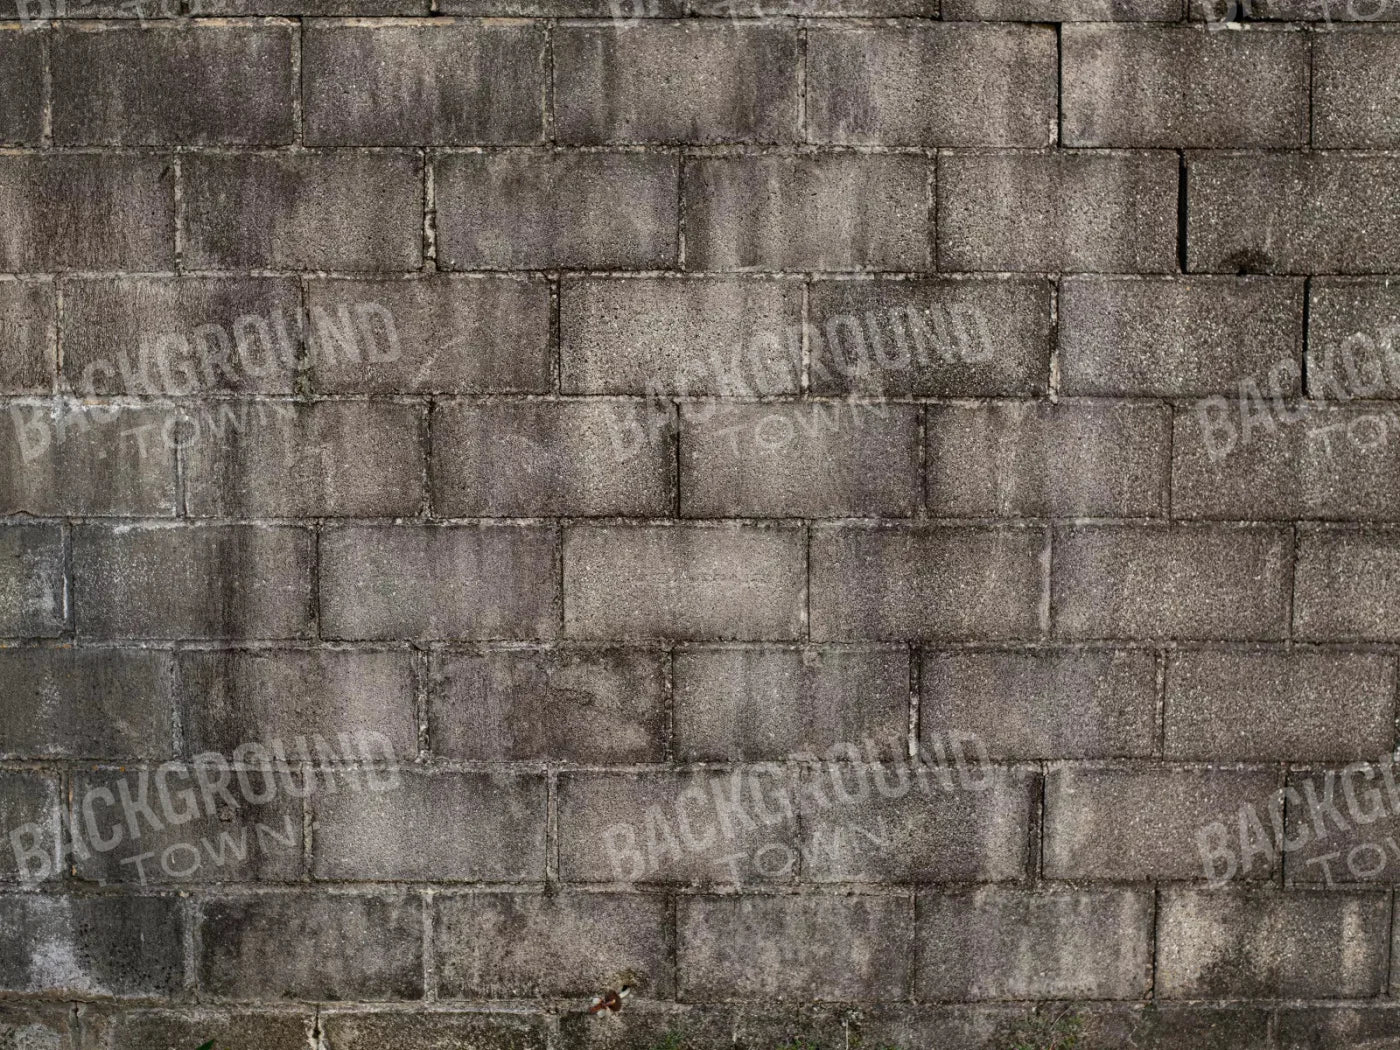 Weathered Cinderblock Wall 7X5 Ultracloth ( 84 X 60 Inch ) Backdrop